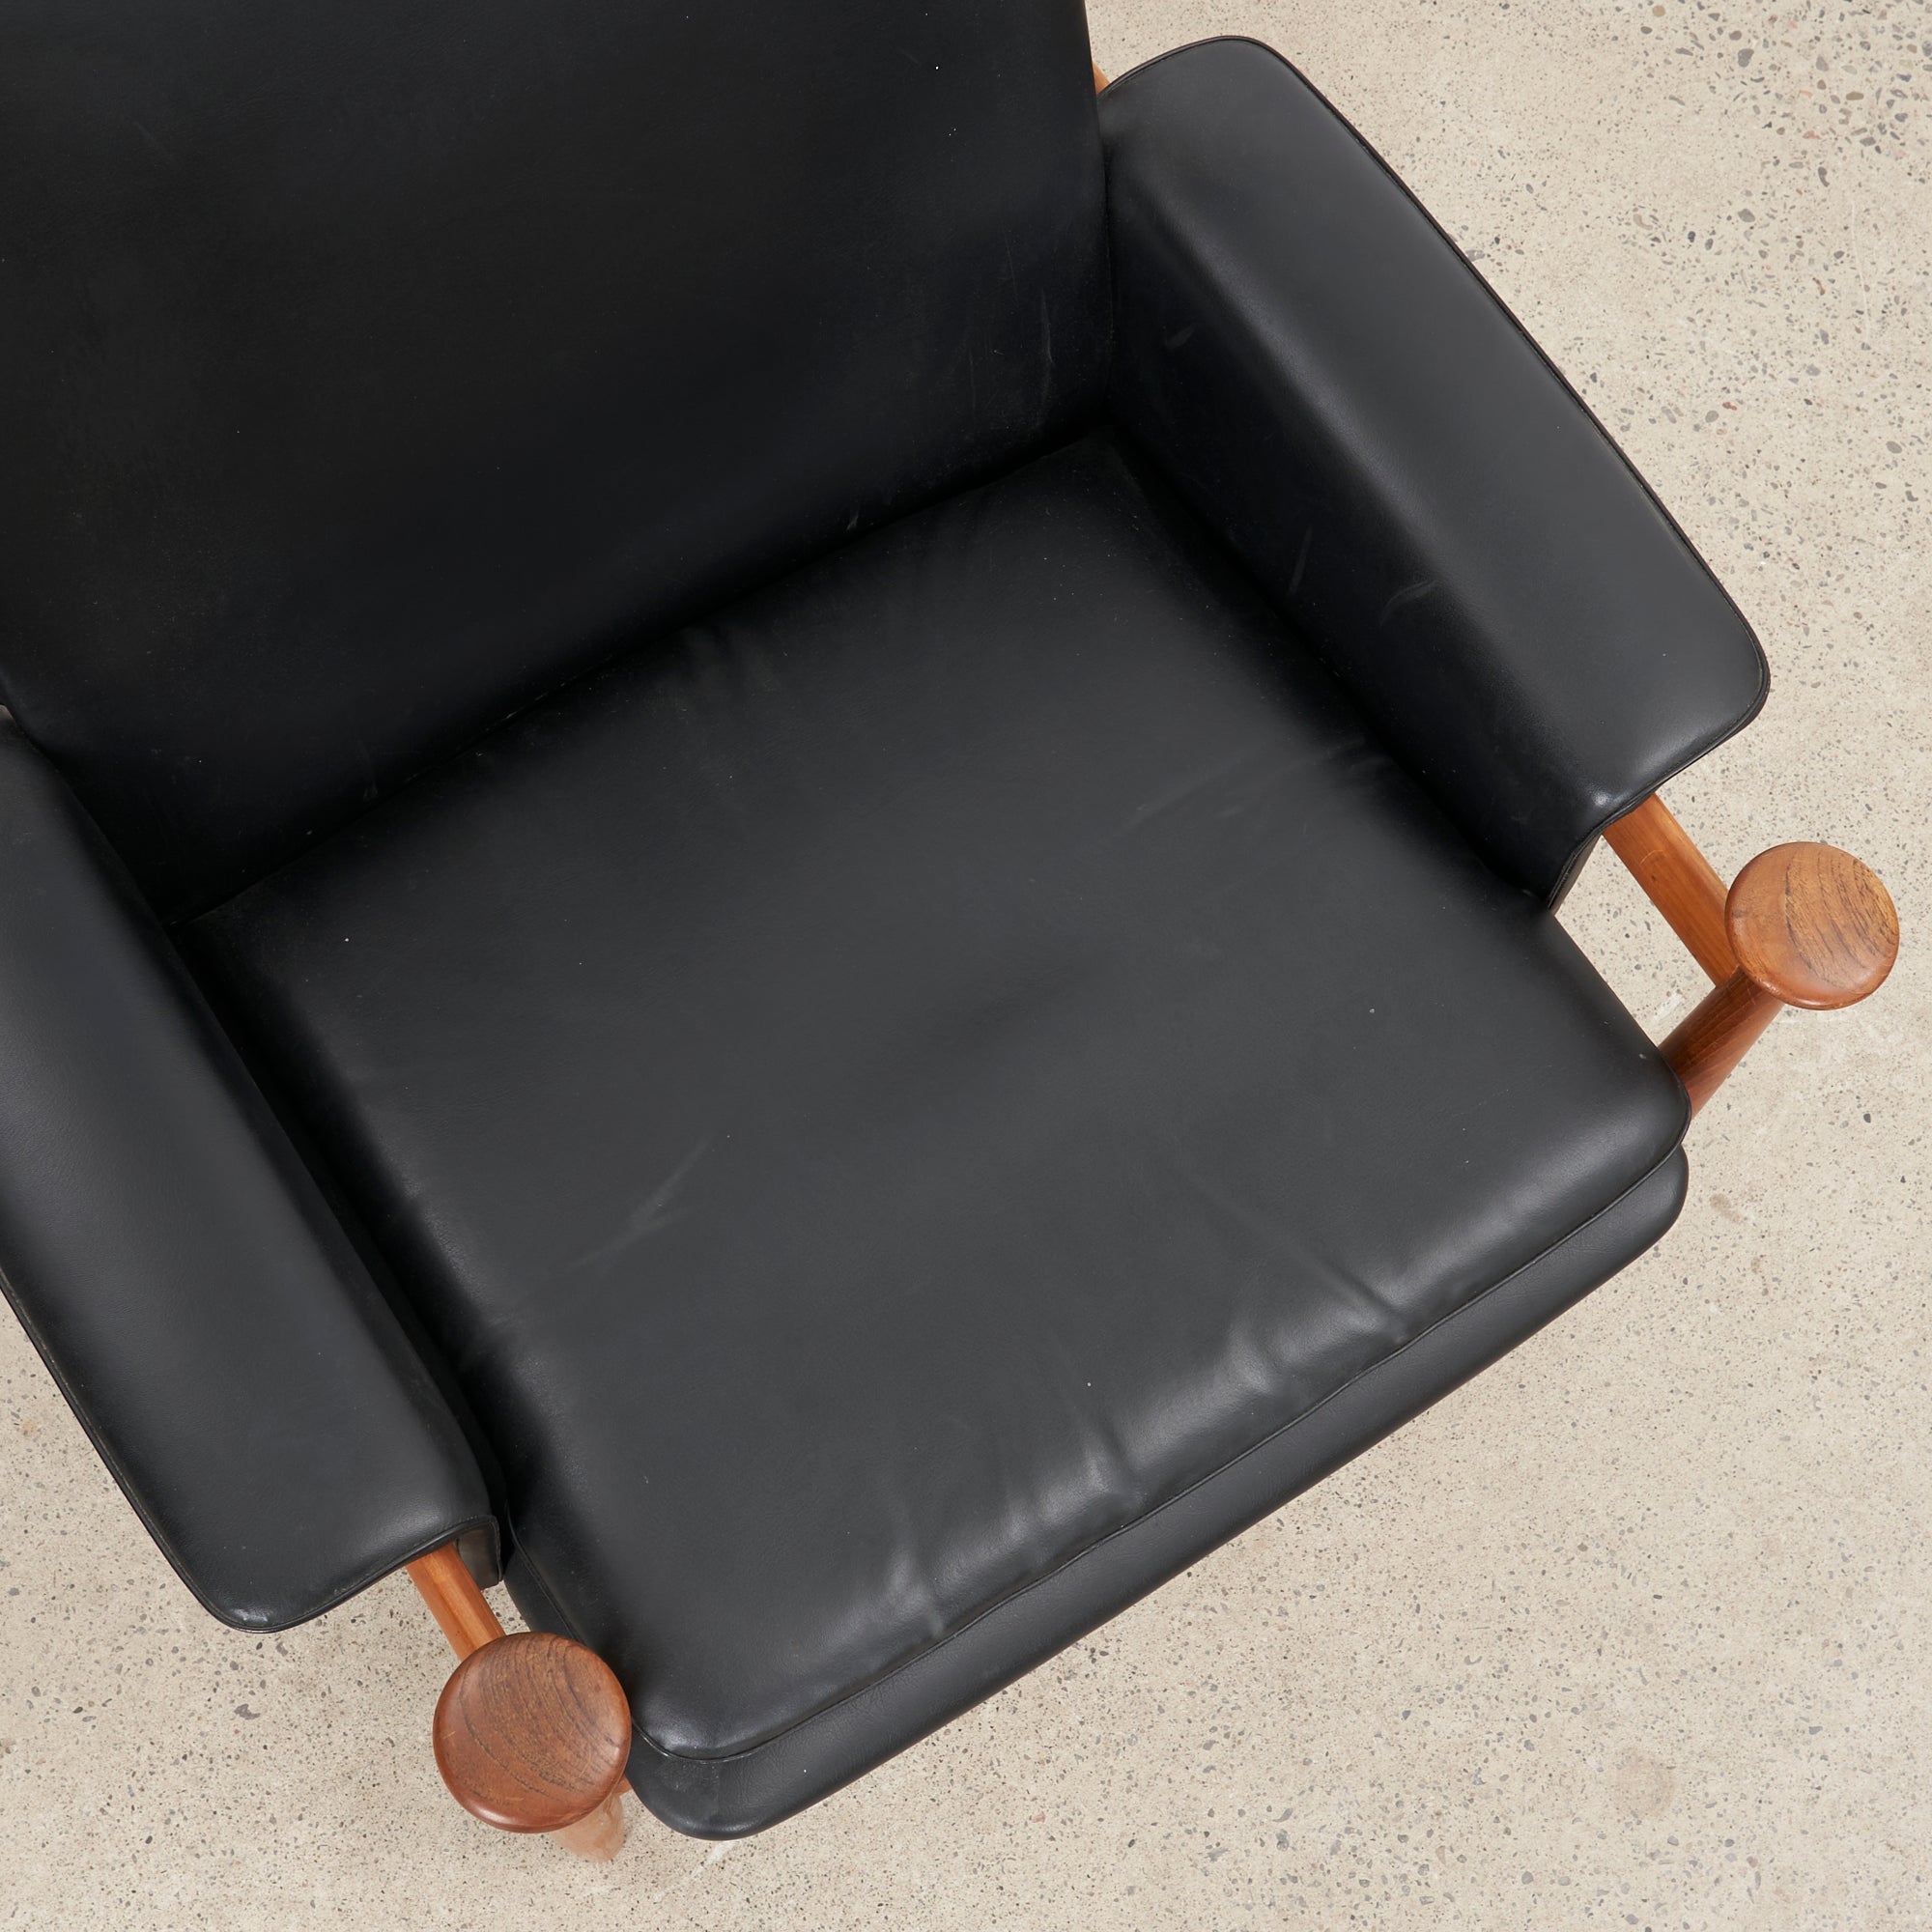 'Bwana' Teak & Leather Lounge Chair & Ottoman by Finn Juhl for France & Søn, Denmark